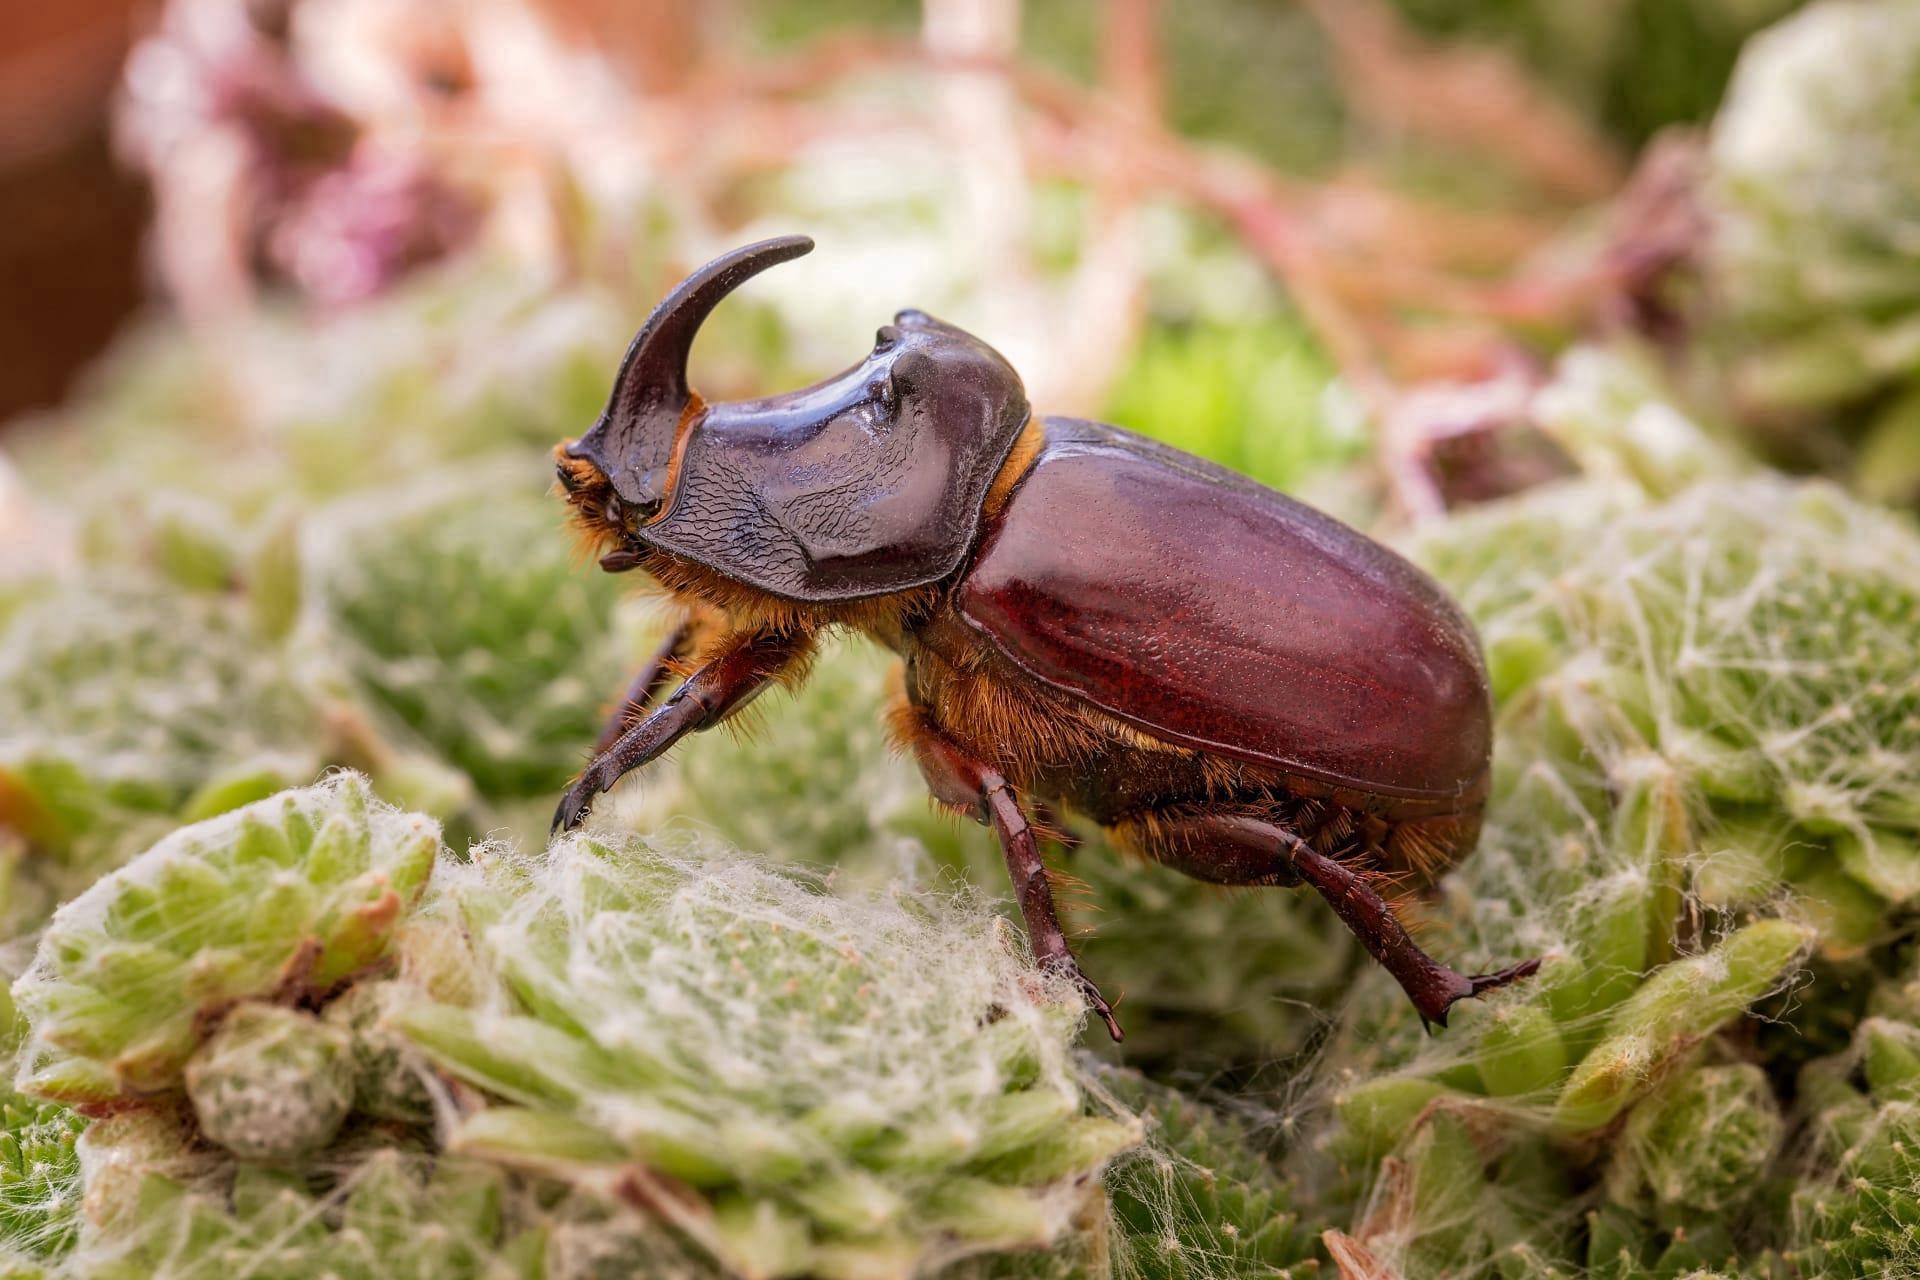 Rhinoceros beetle pictures